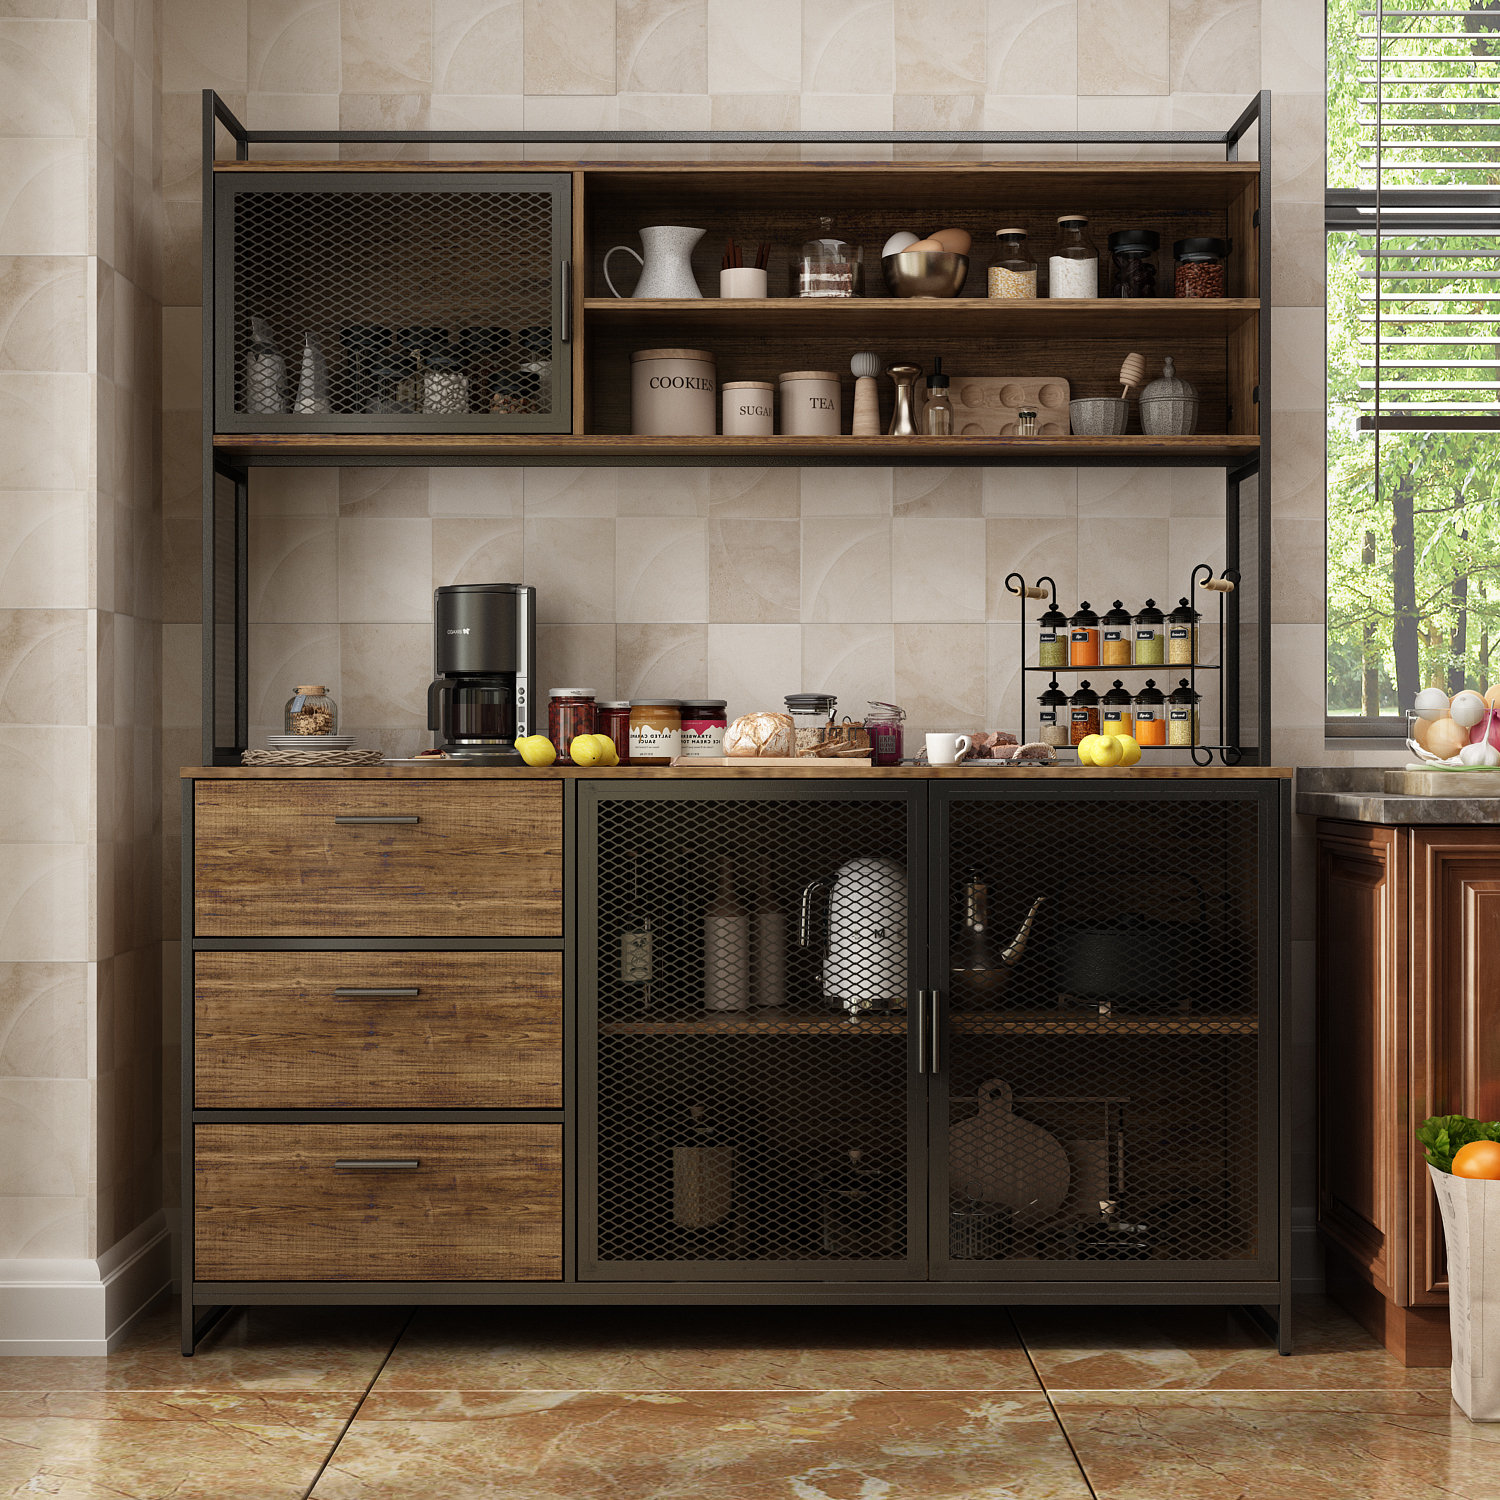 6 Door Storage Cabinet Office Organizer Kitchen Pantry Cupboard Shelves  COLORS